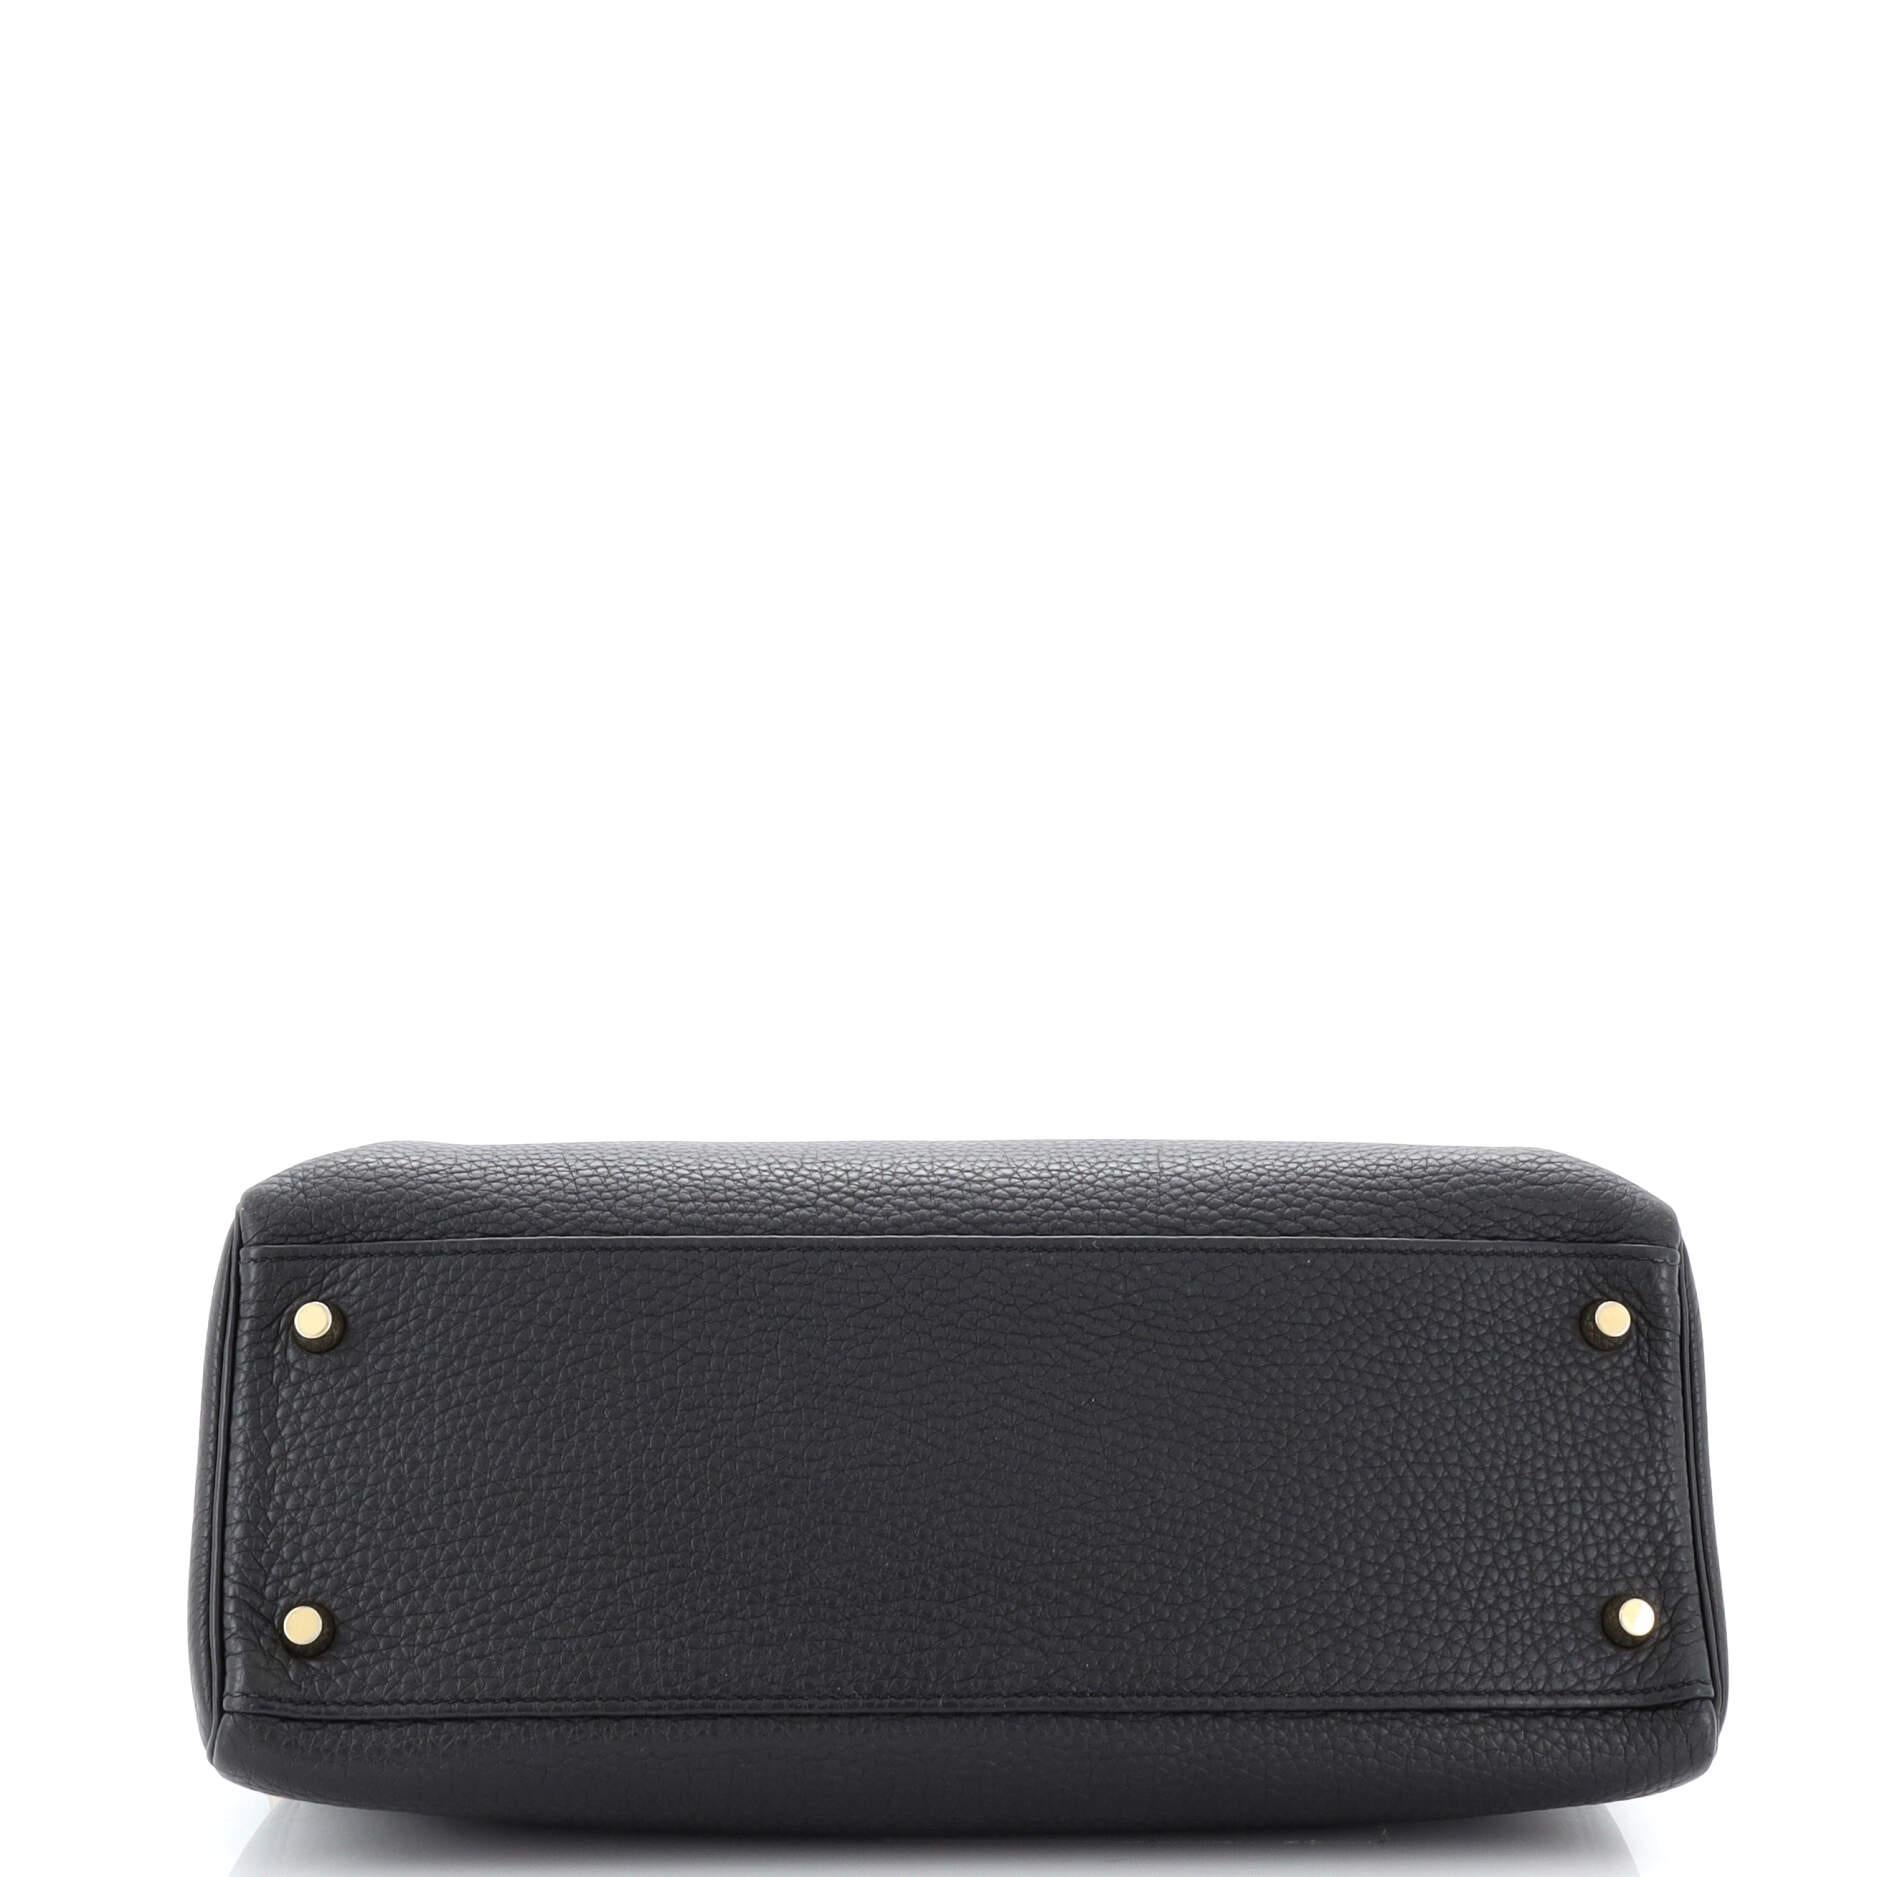 Women's Hermes Kelly Handbag Noir Togo with Gold Hardware 32